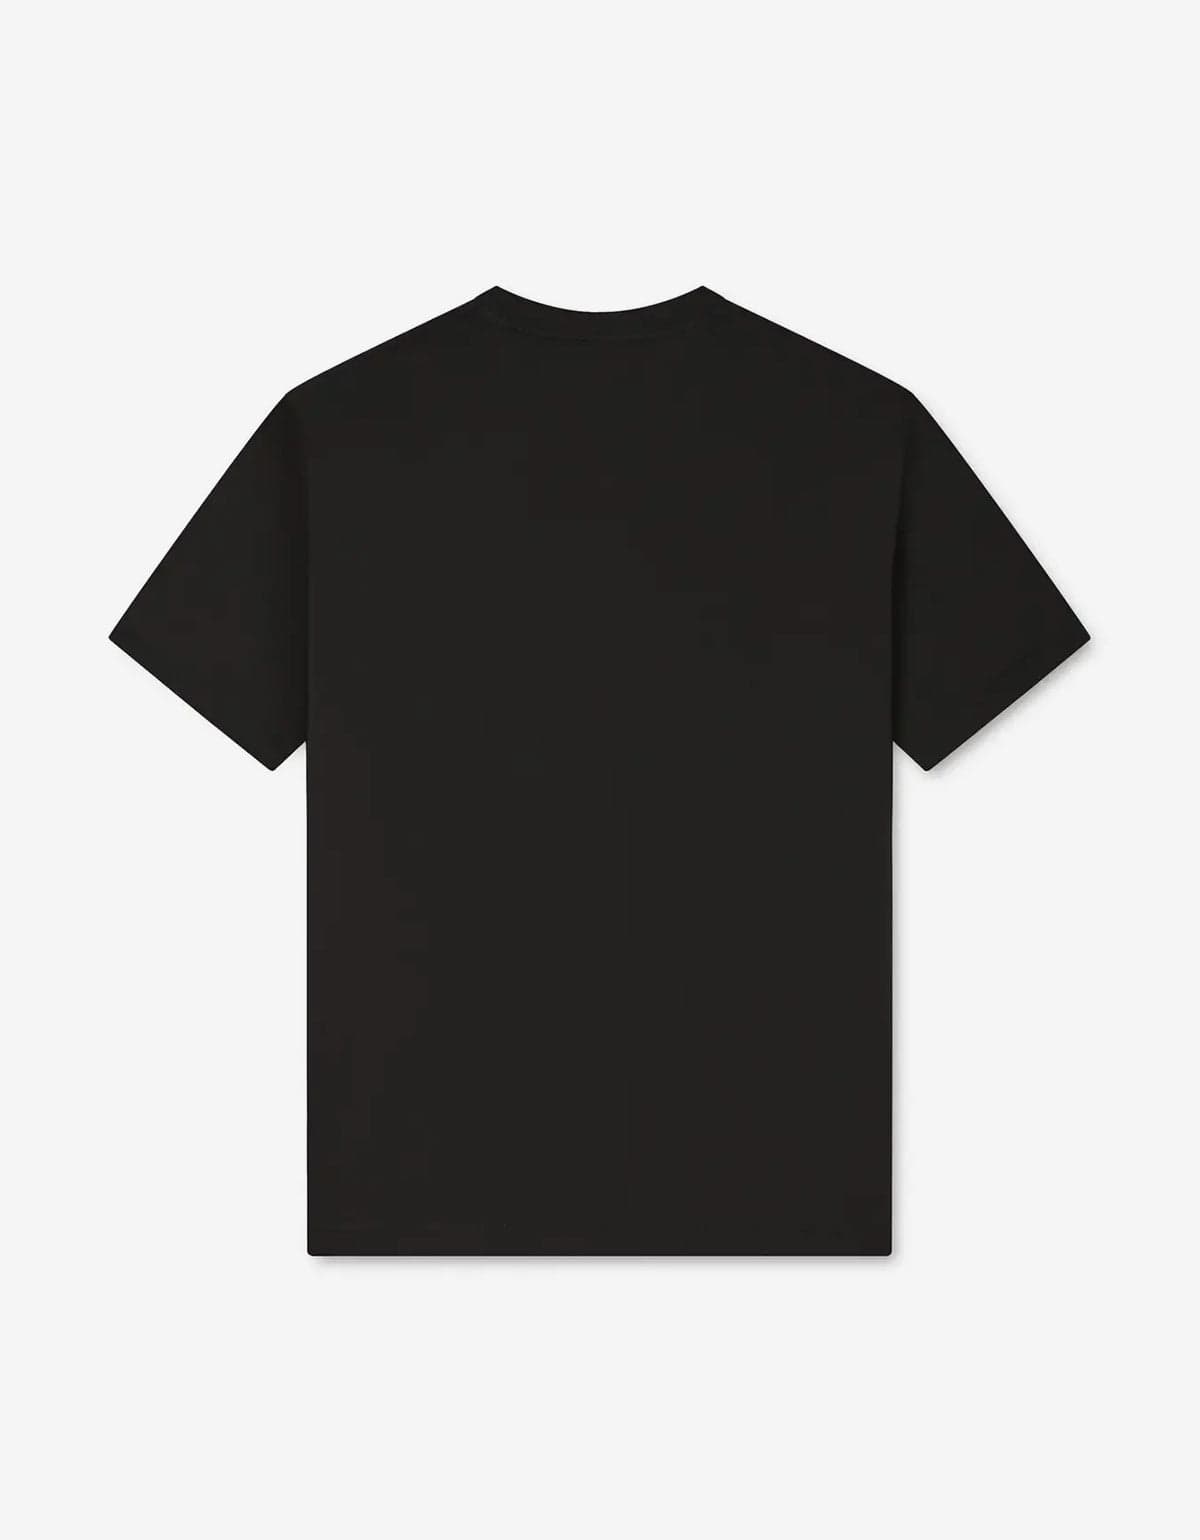 Kenzo Kenzo Boke Flower 2.0 Classic Black T-Shirt